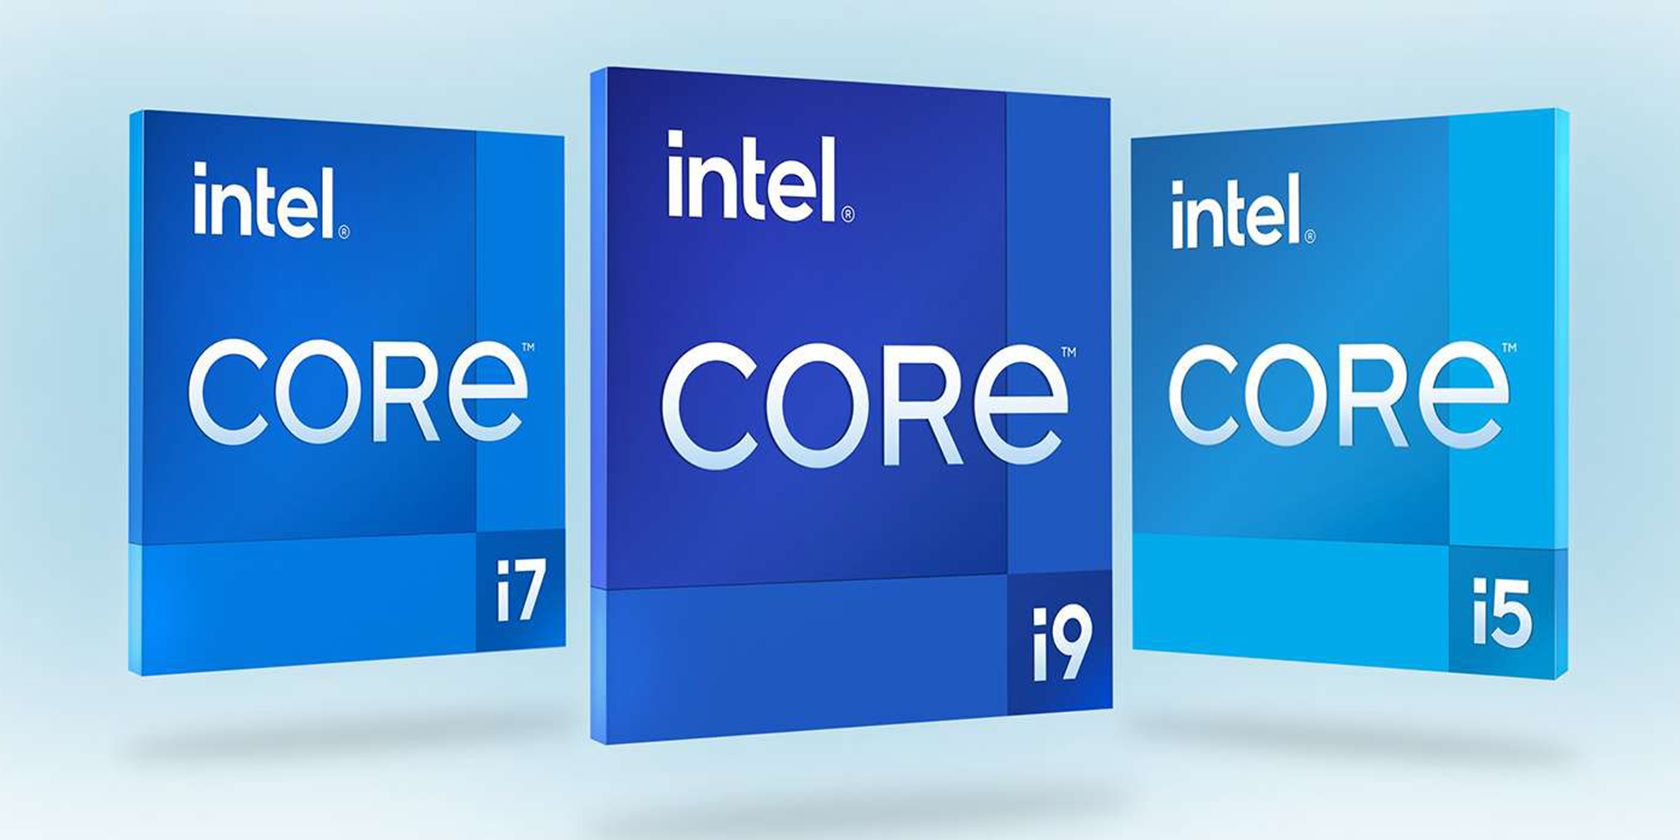 14th-gen Intel Core processors